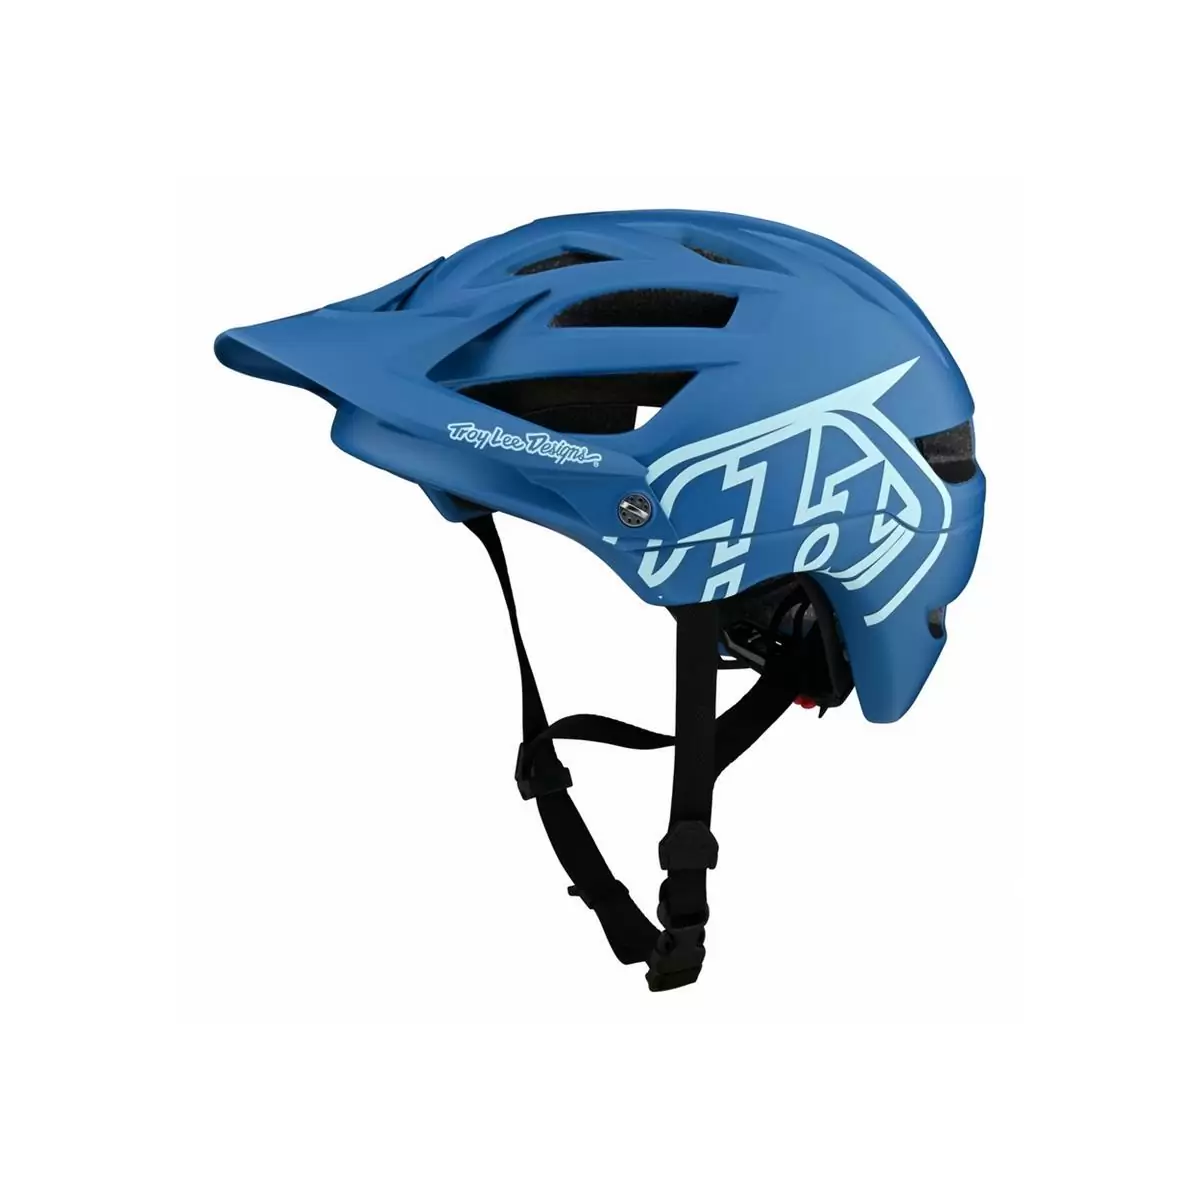 Enduro MTB Helmet A3 Drone Light Slate Blue Size S (54-56cm) - image